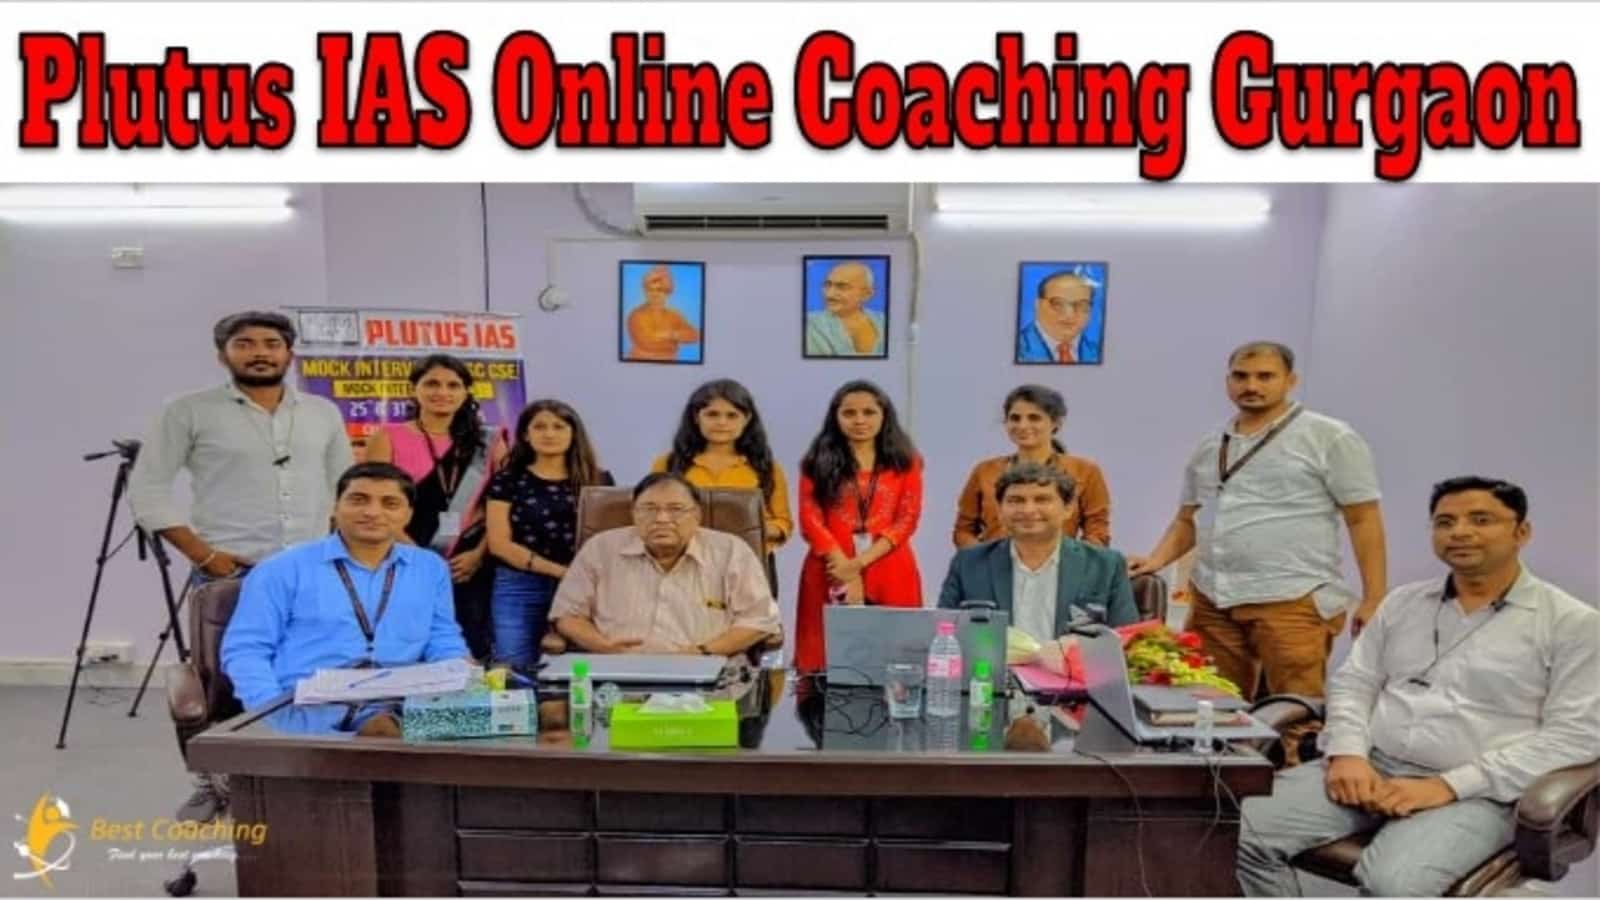 Plutus IAS Online Coaching Gurgaon